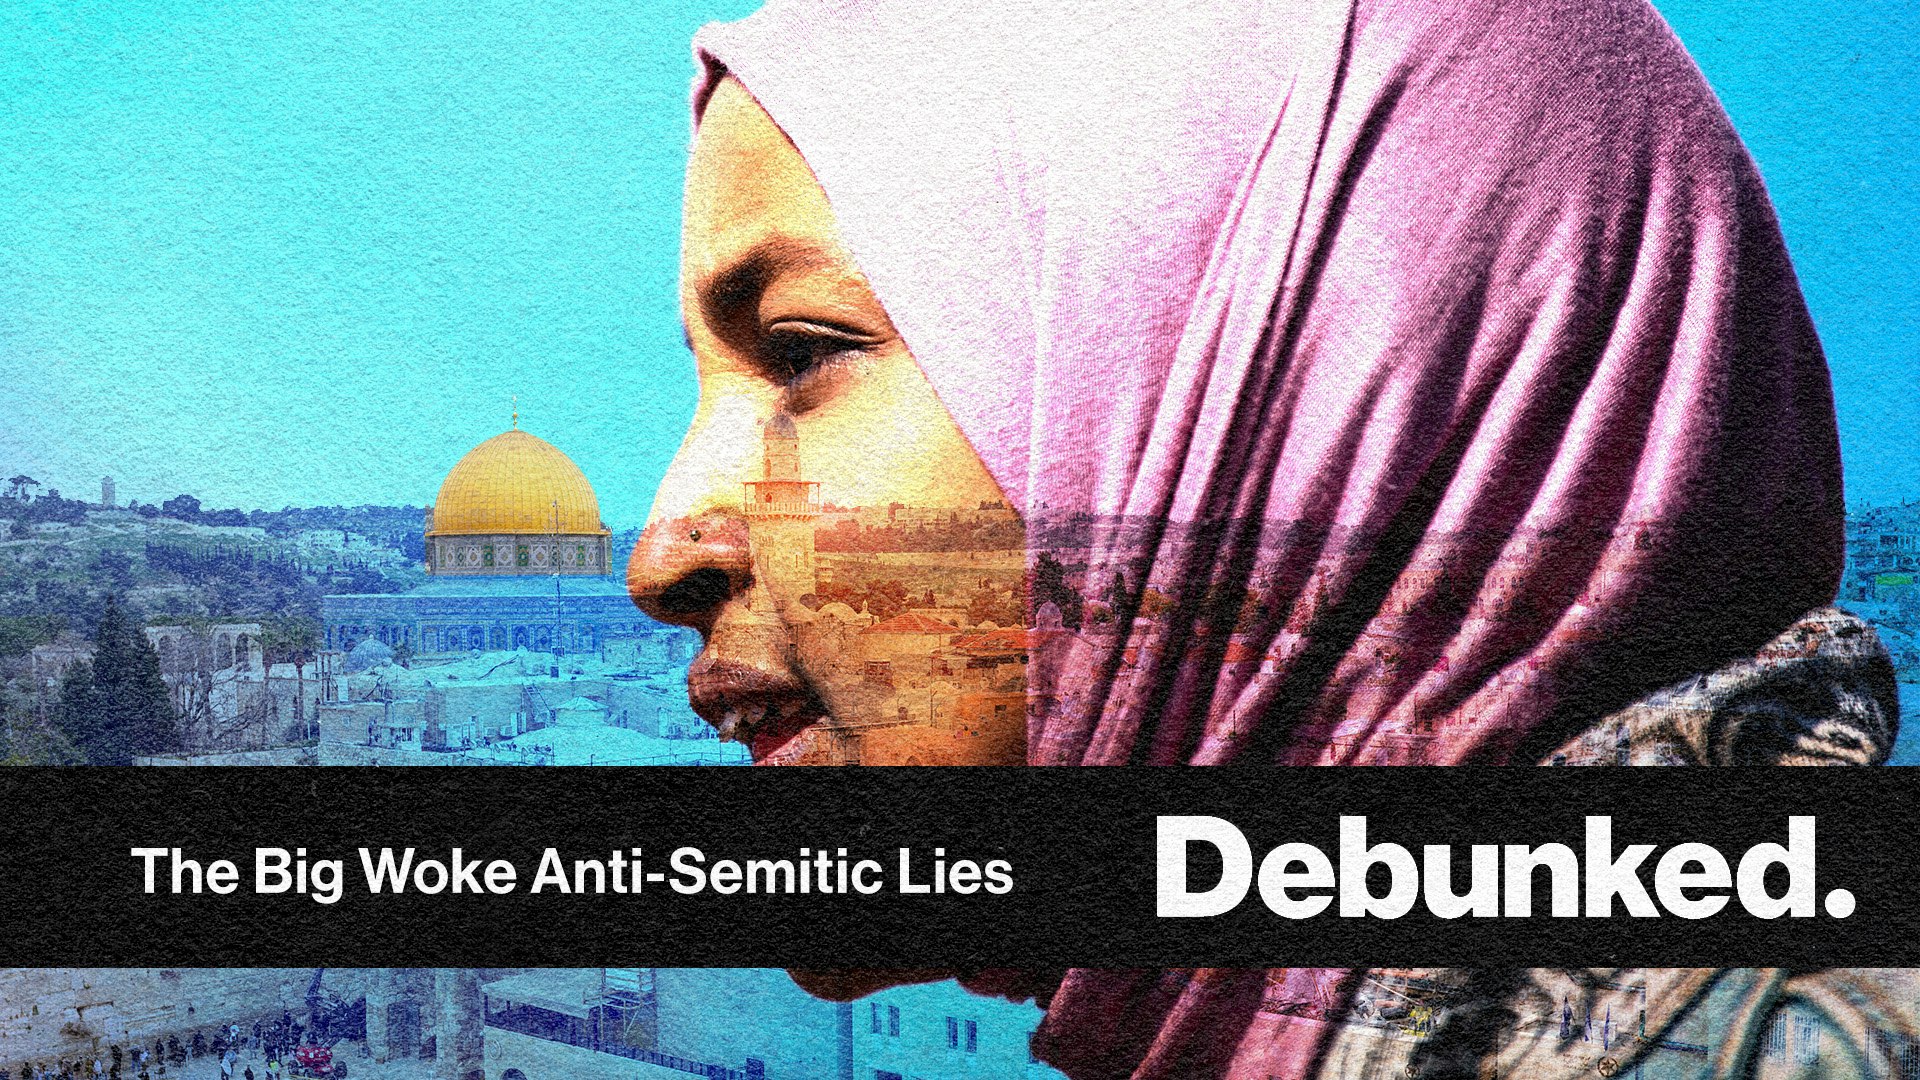 The Big Woke Anti-Semitic Lies